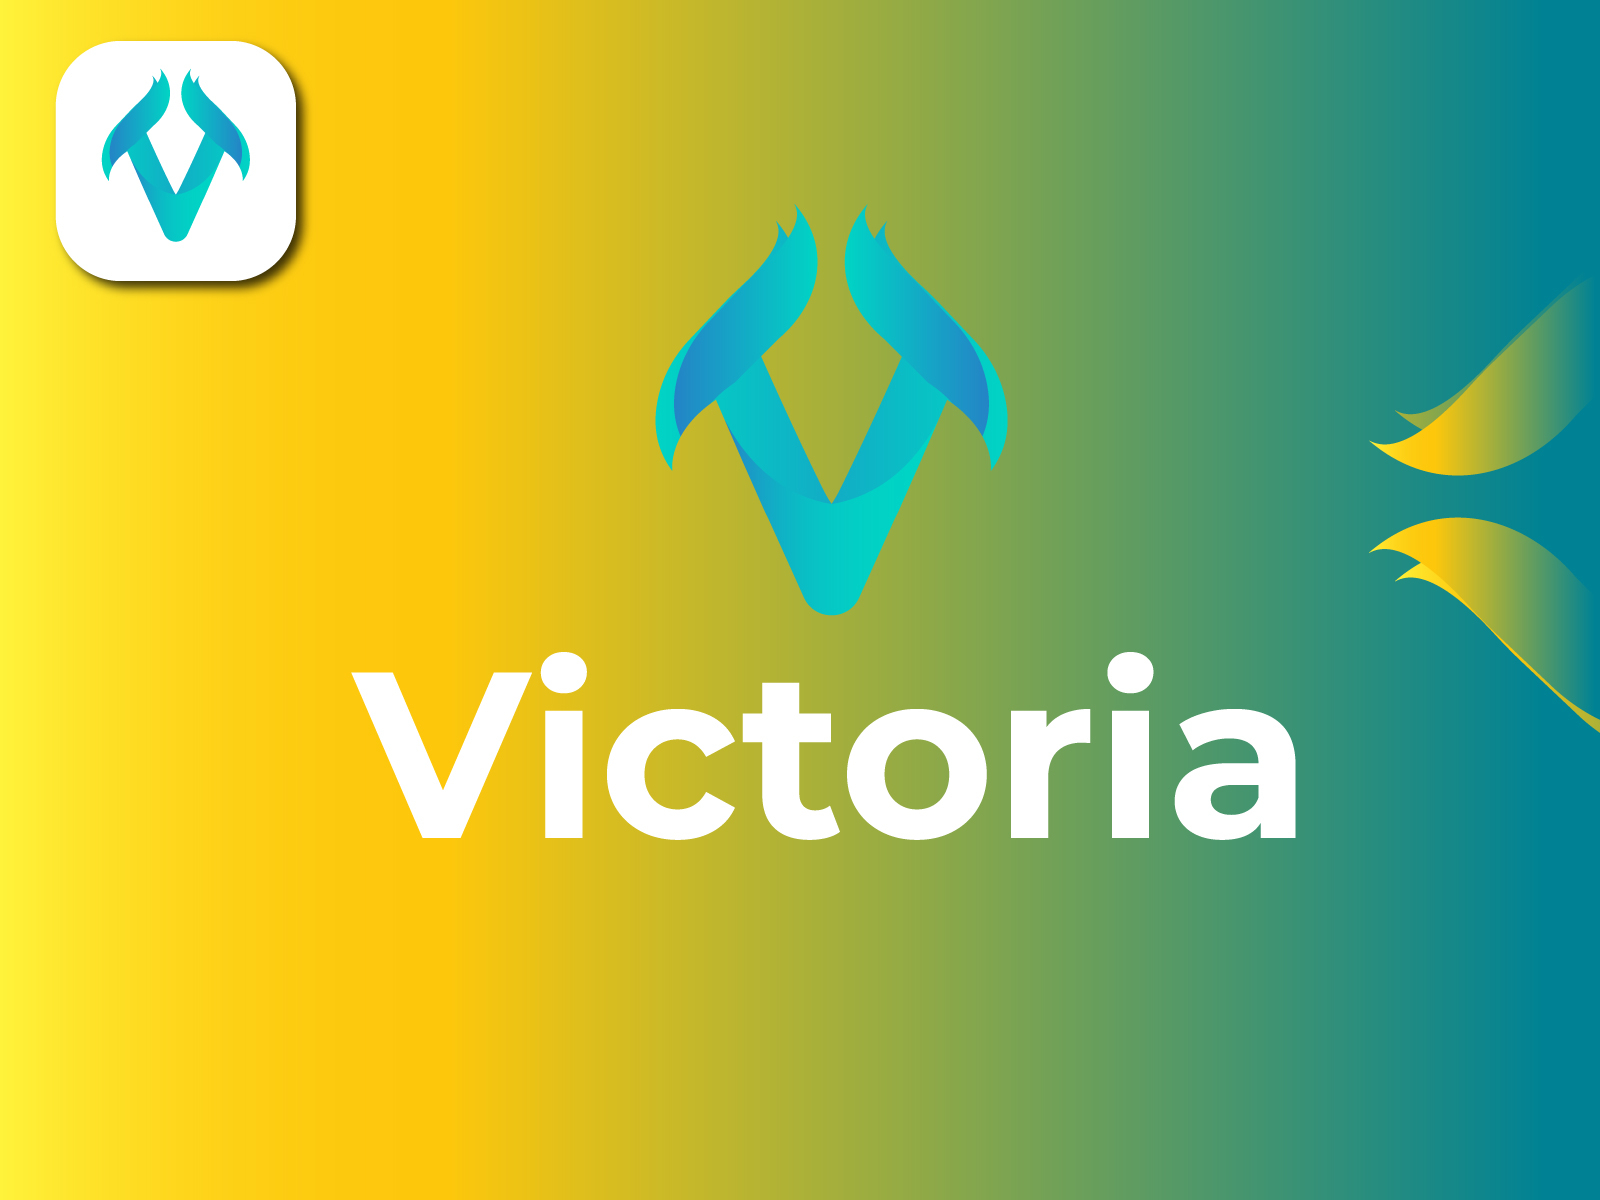 Victoria Letter V logo Design by Mahdi Hasan on Dribbble